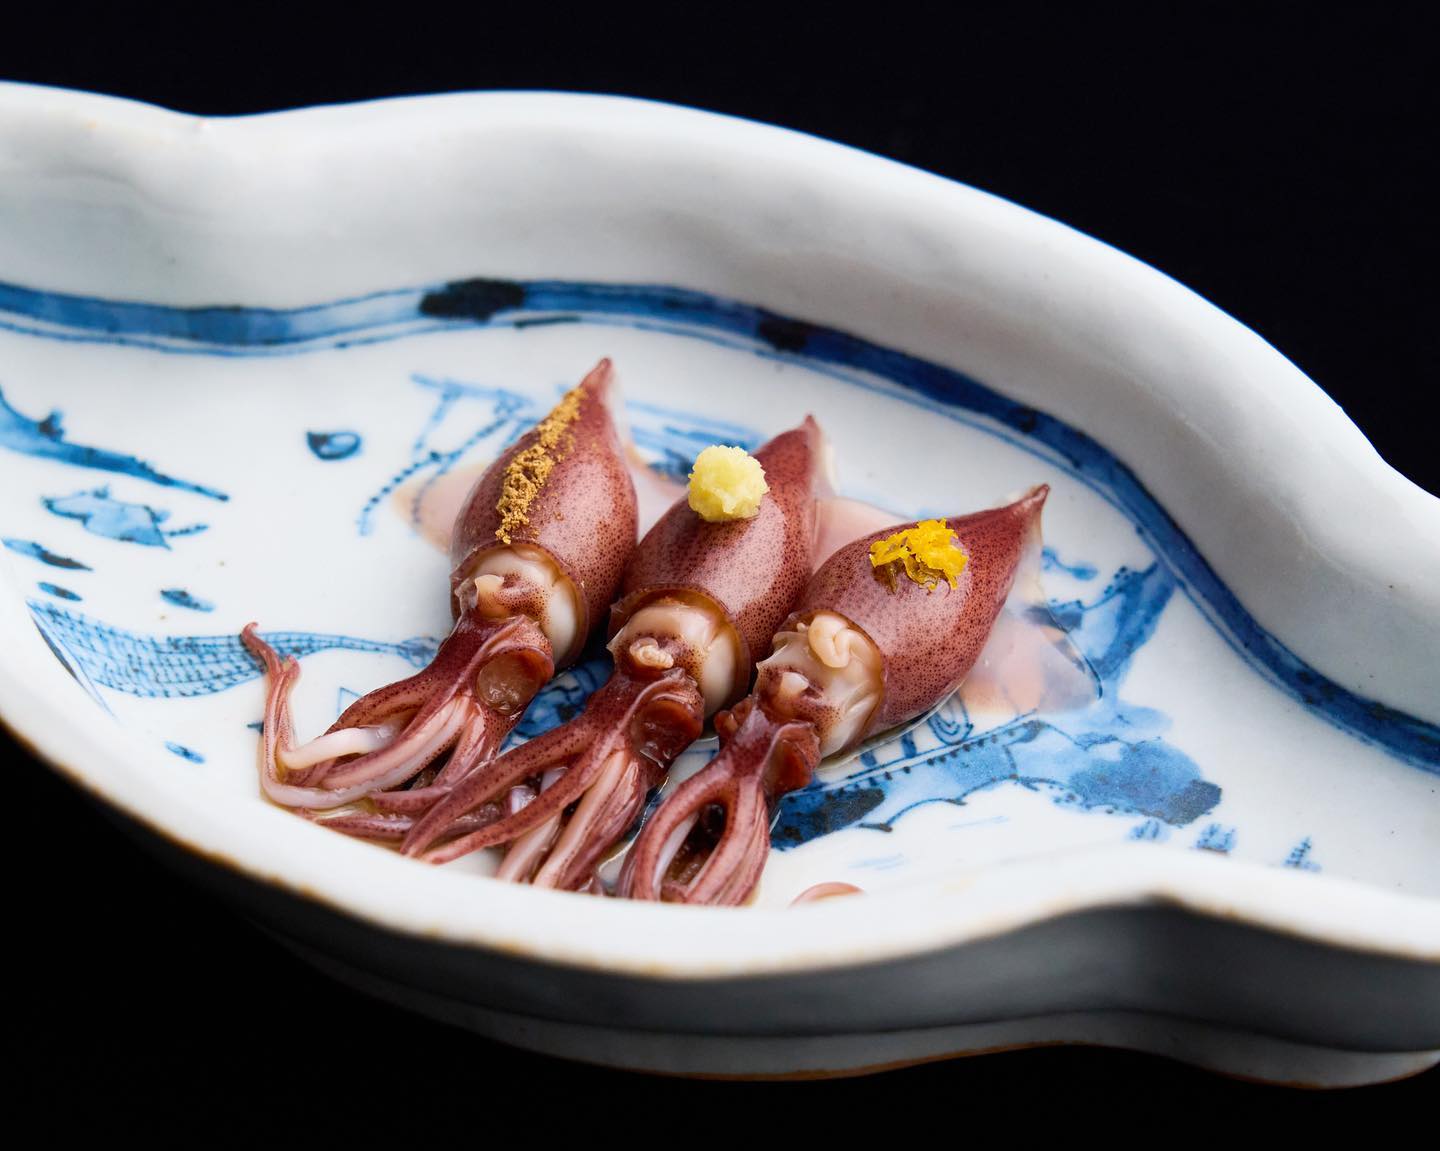 Sazenka restaurant, firefly squid cured in Shaoxing Rice wine